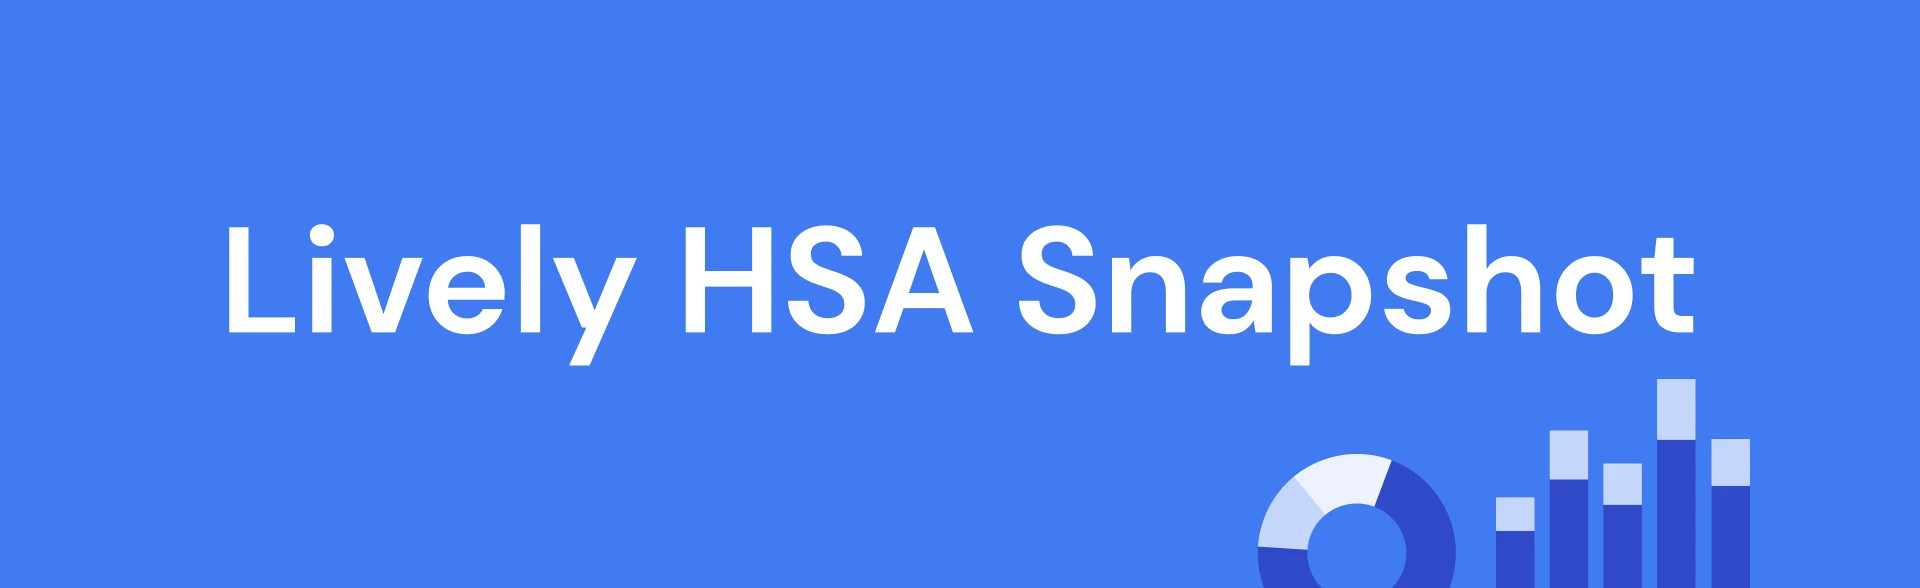 HSA Snapshot blog header